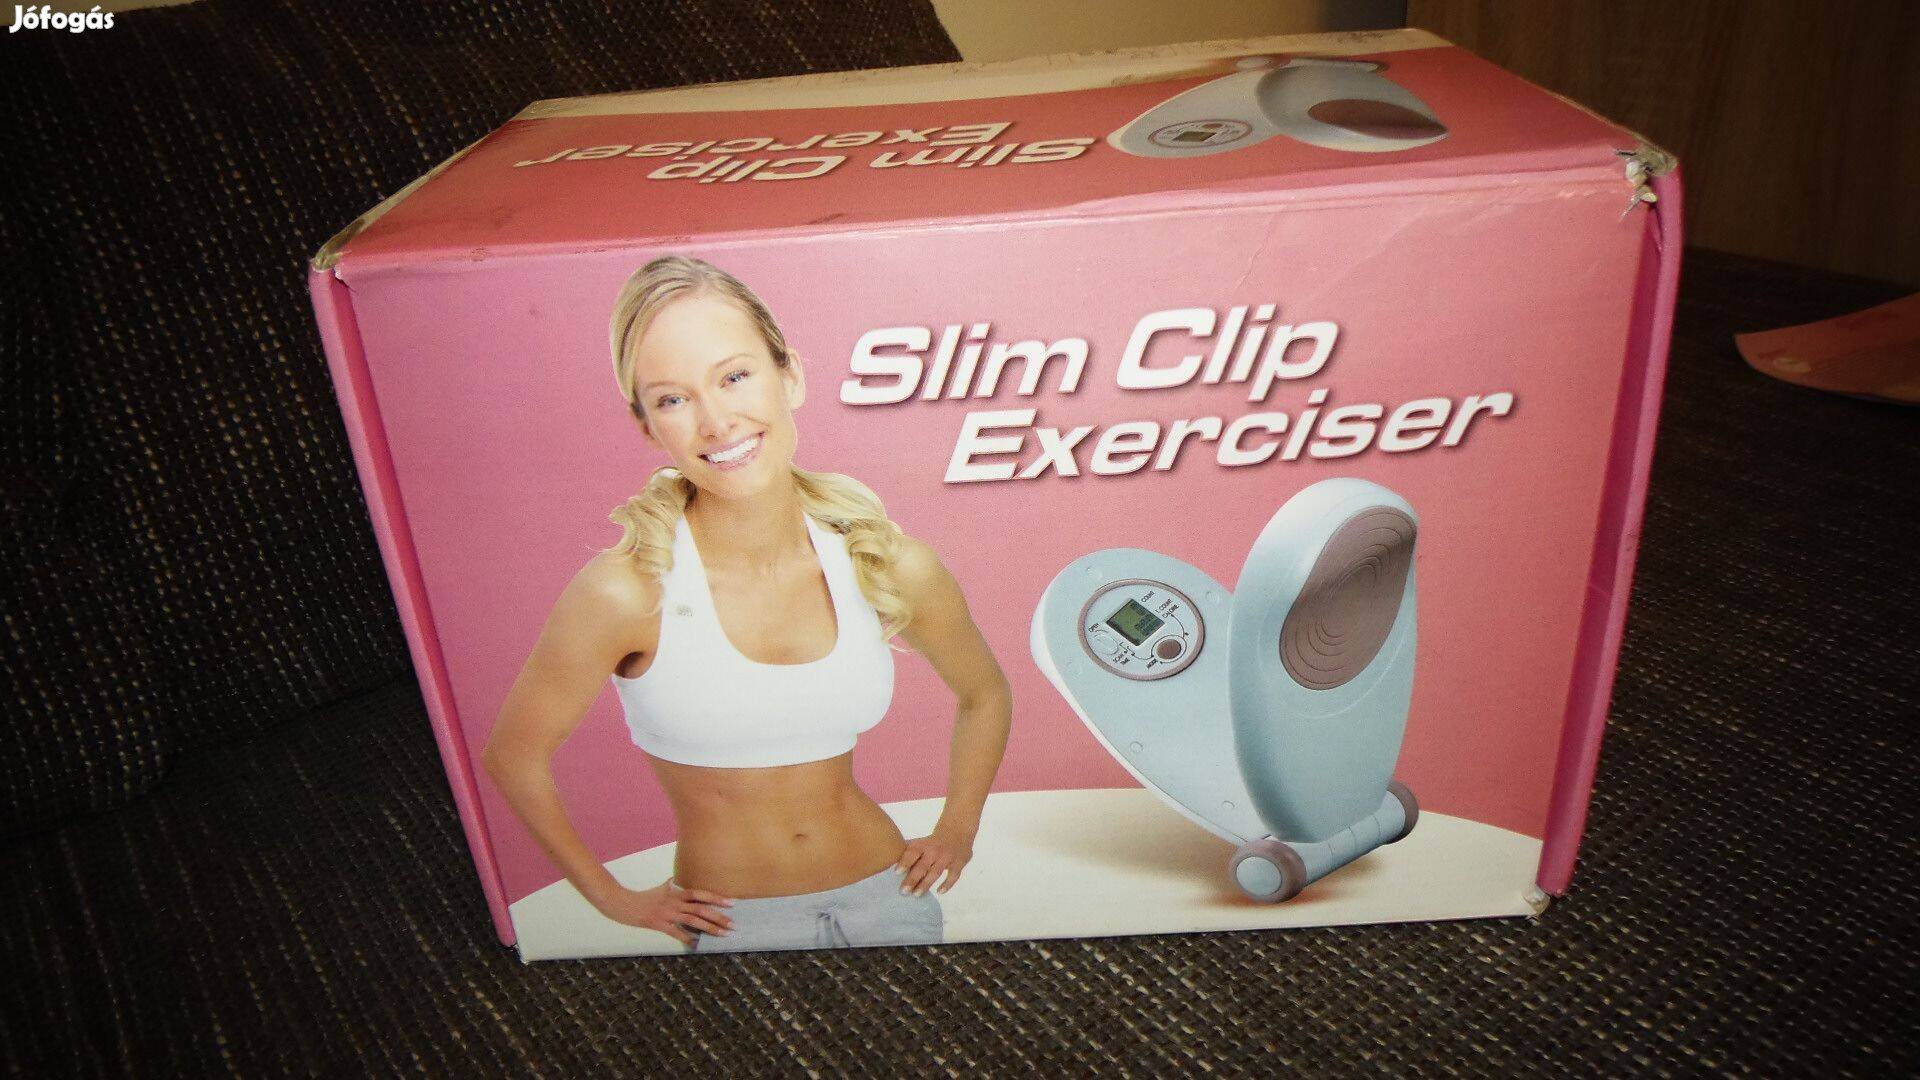 Slim clip fitnesz gép (Slim clip exerciser, új)